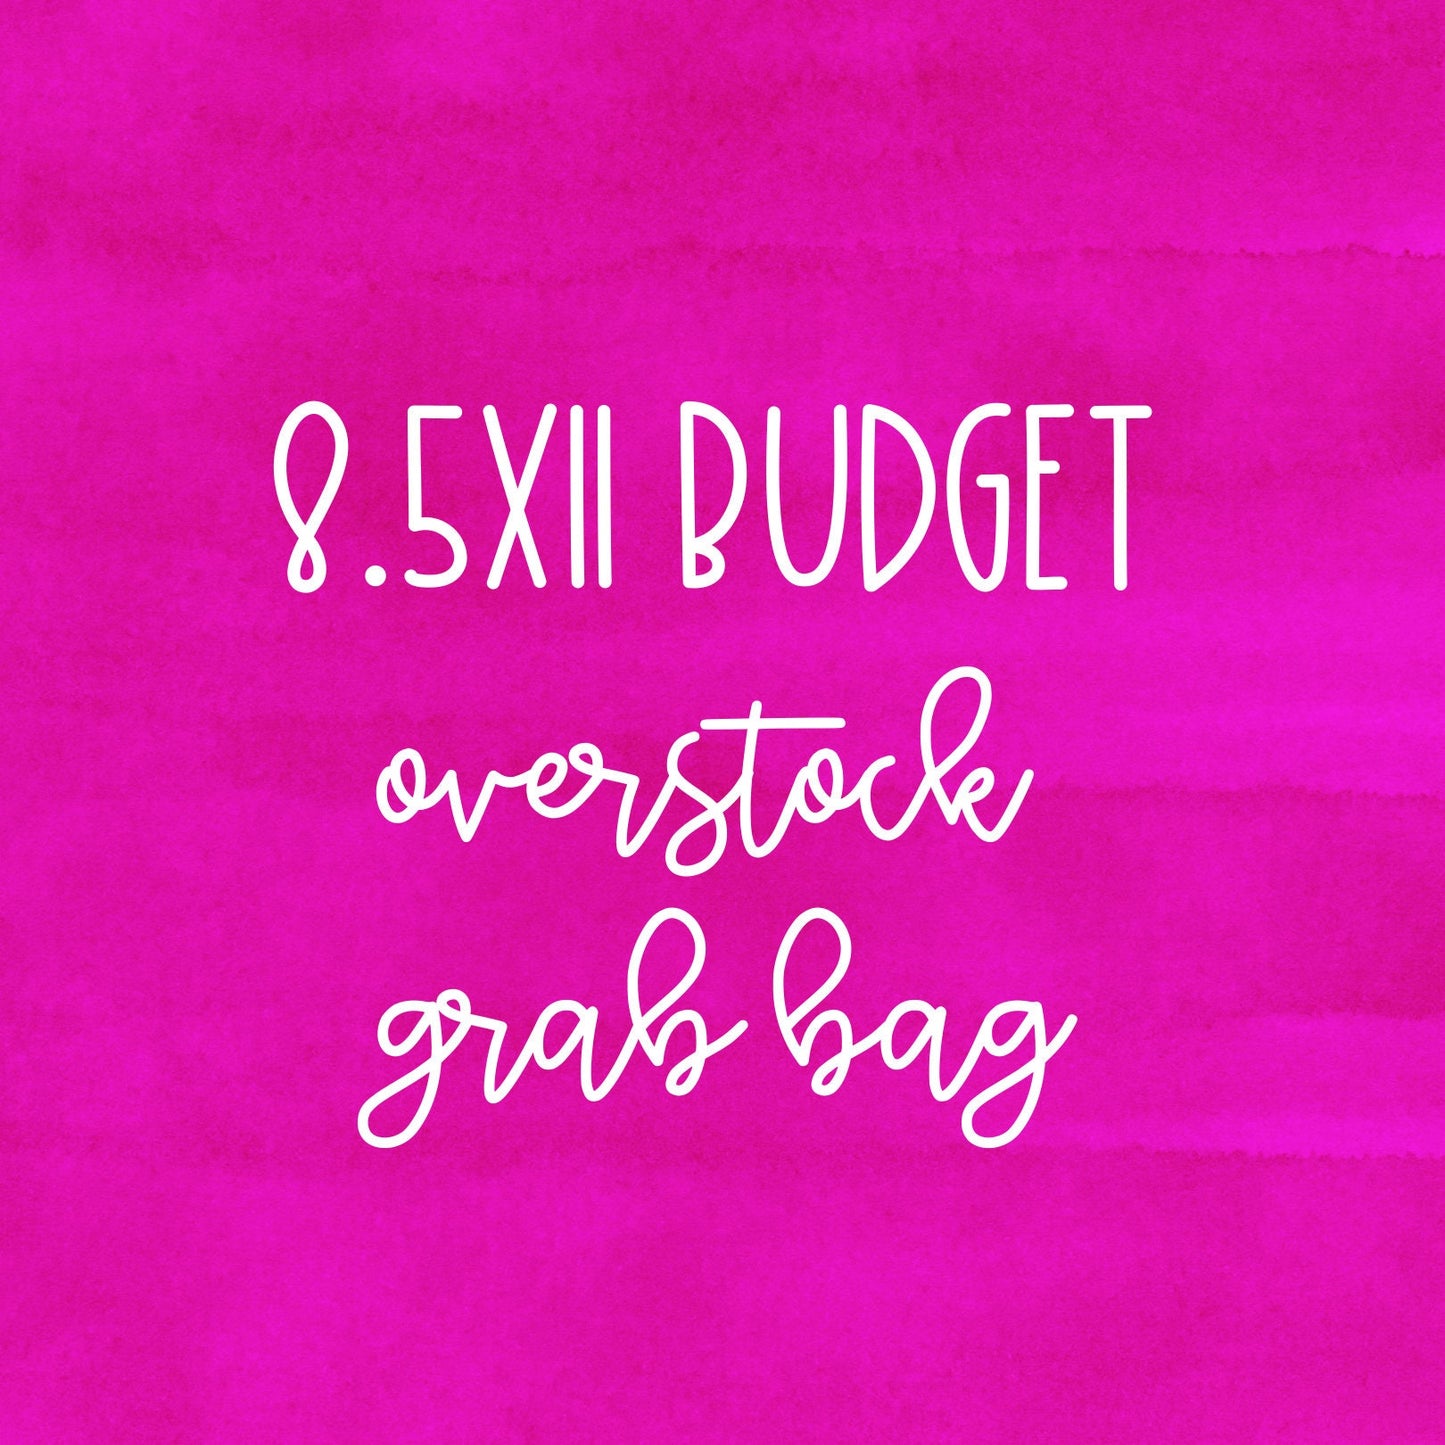 8.5x11 Budget Overstock || 8.5x11 Budget Kits Overstock grab bag